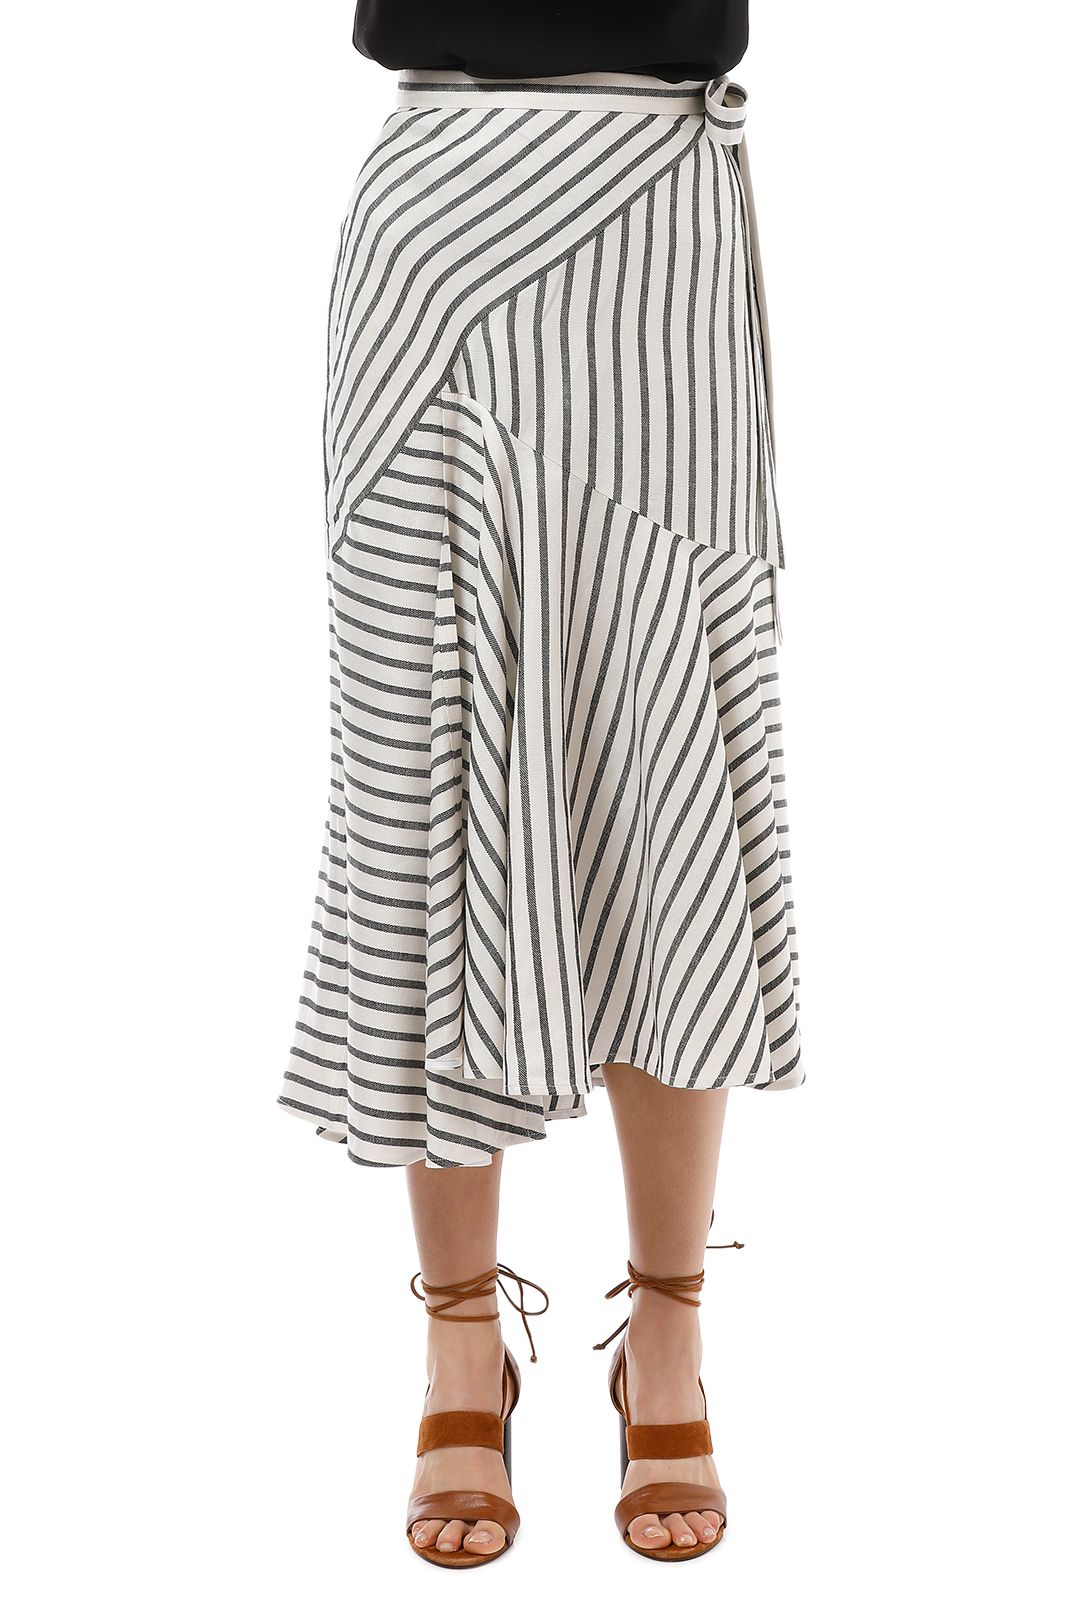 Lover the Label - Marinere Midi Skirt - Stripe - Front Crop